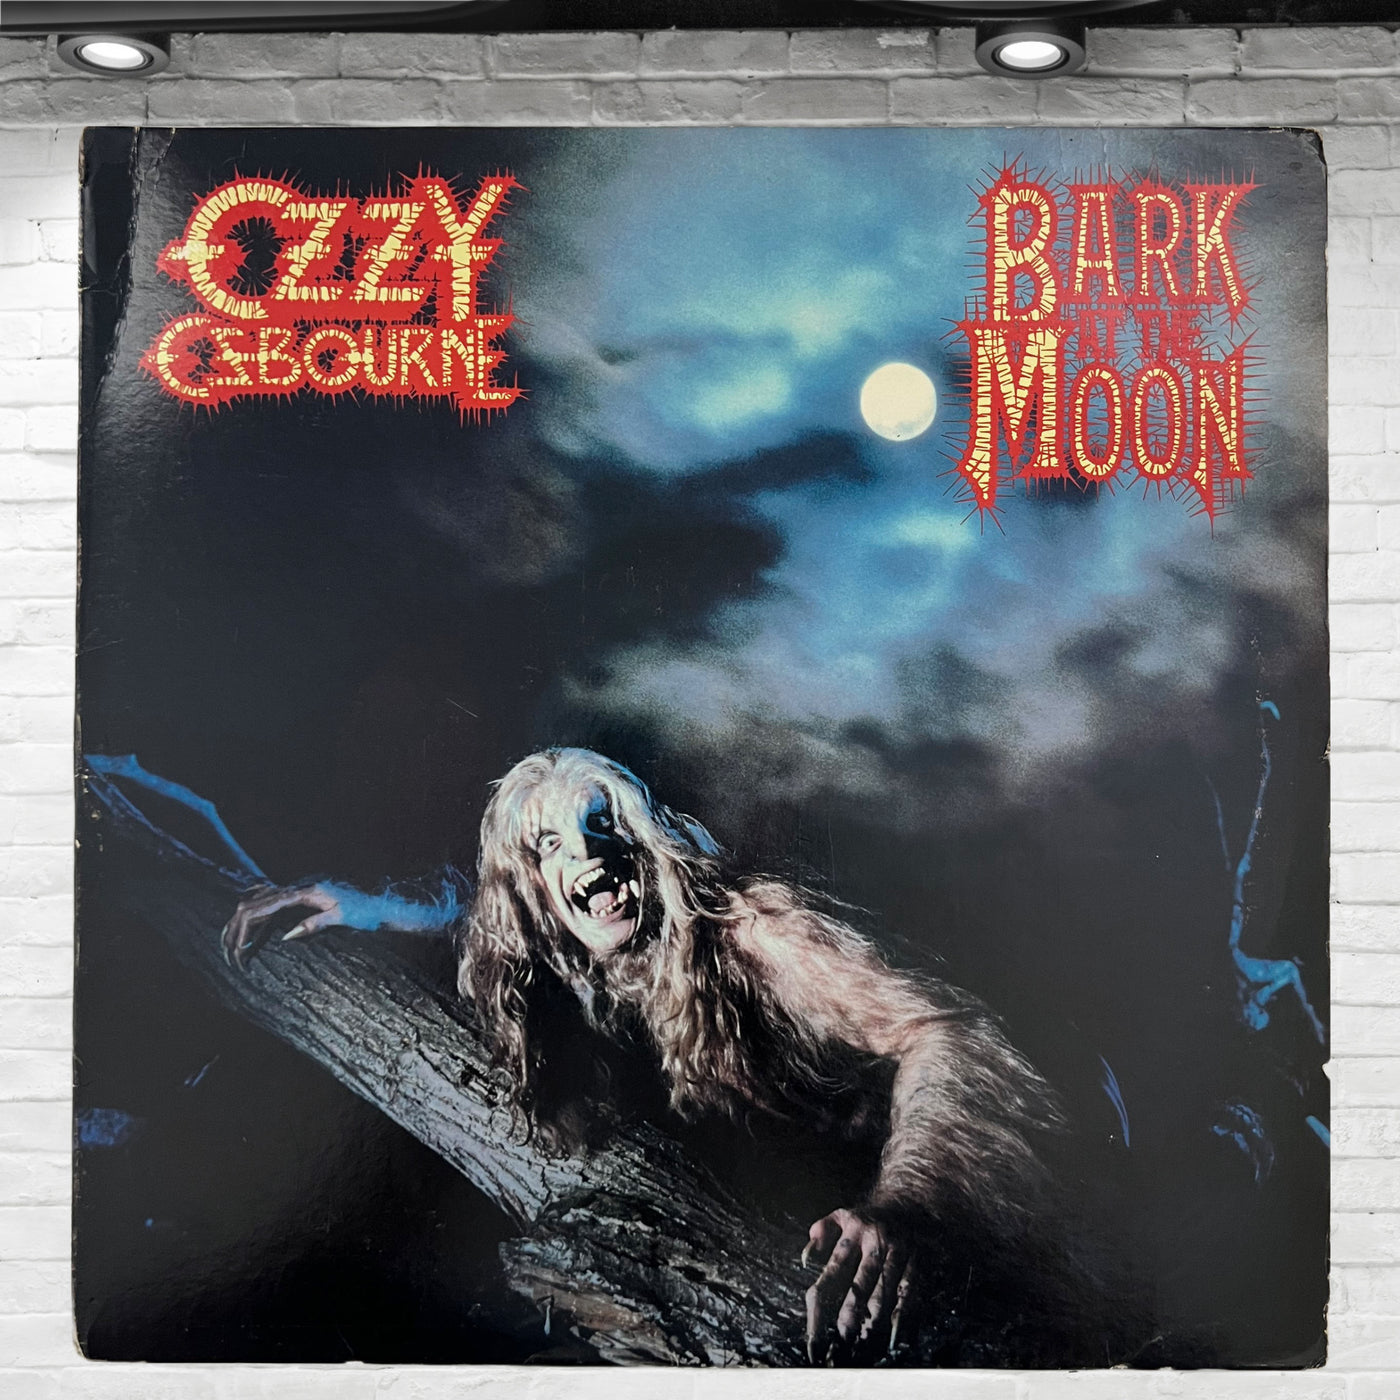 Vintage Original 1983 Ozzy Osbourne Bark At The Moon Vinyl LP Album